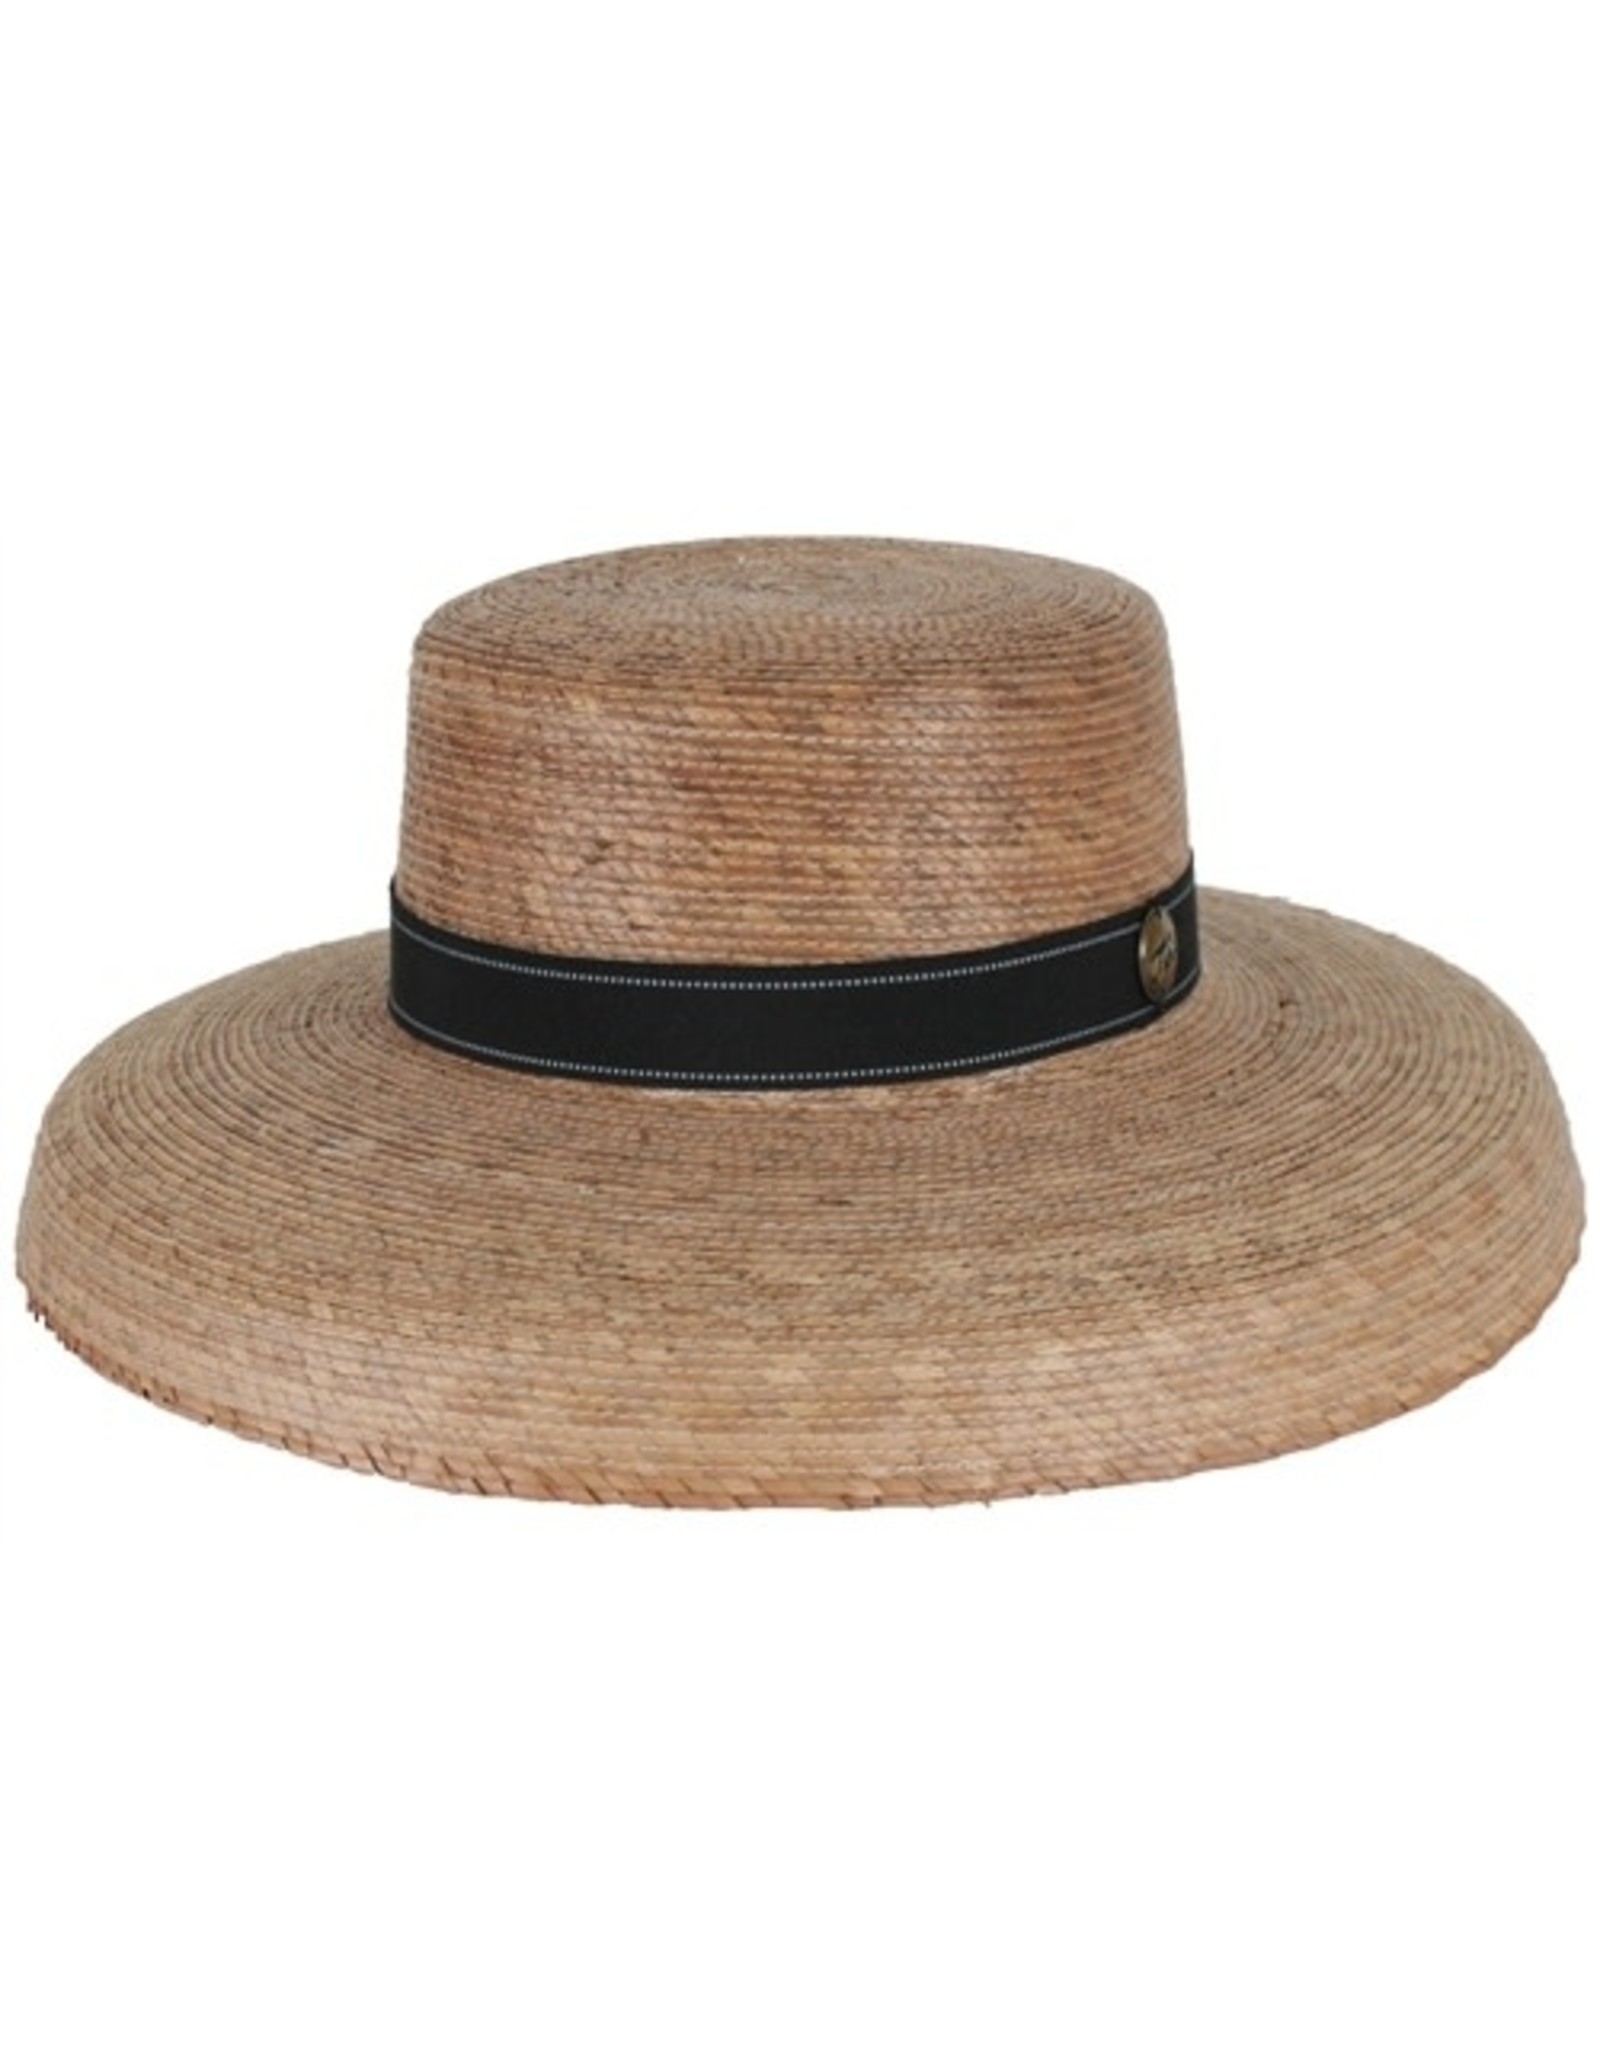 Tula Hat, Brook Mexico